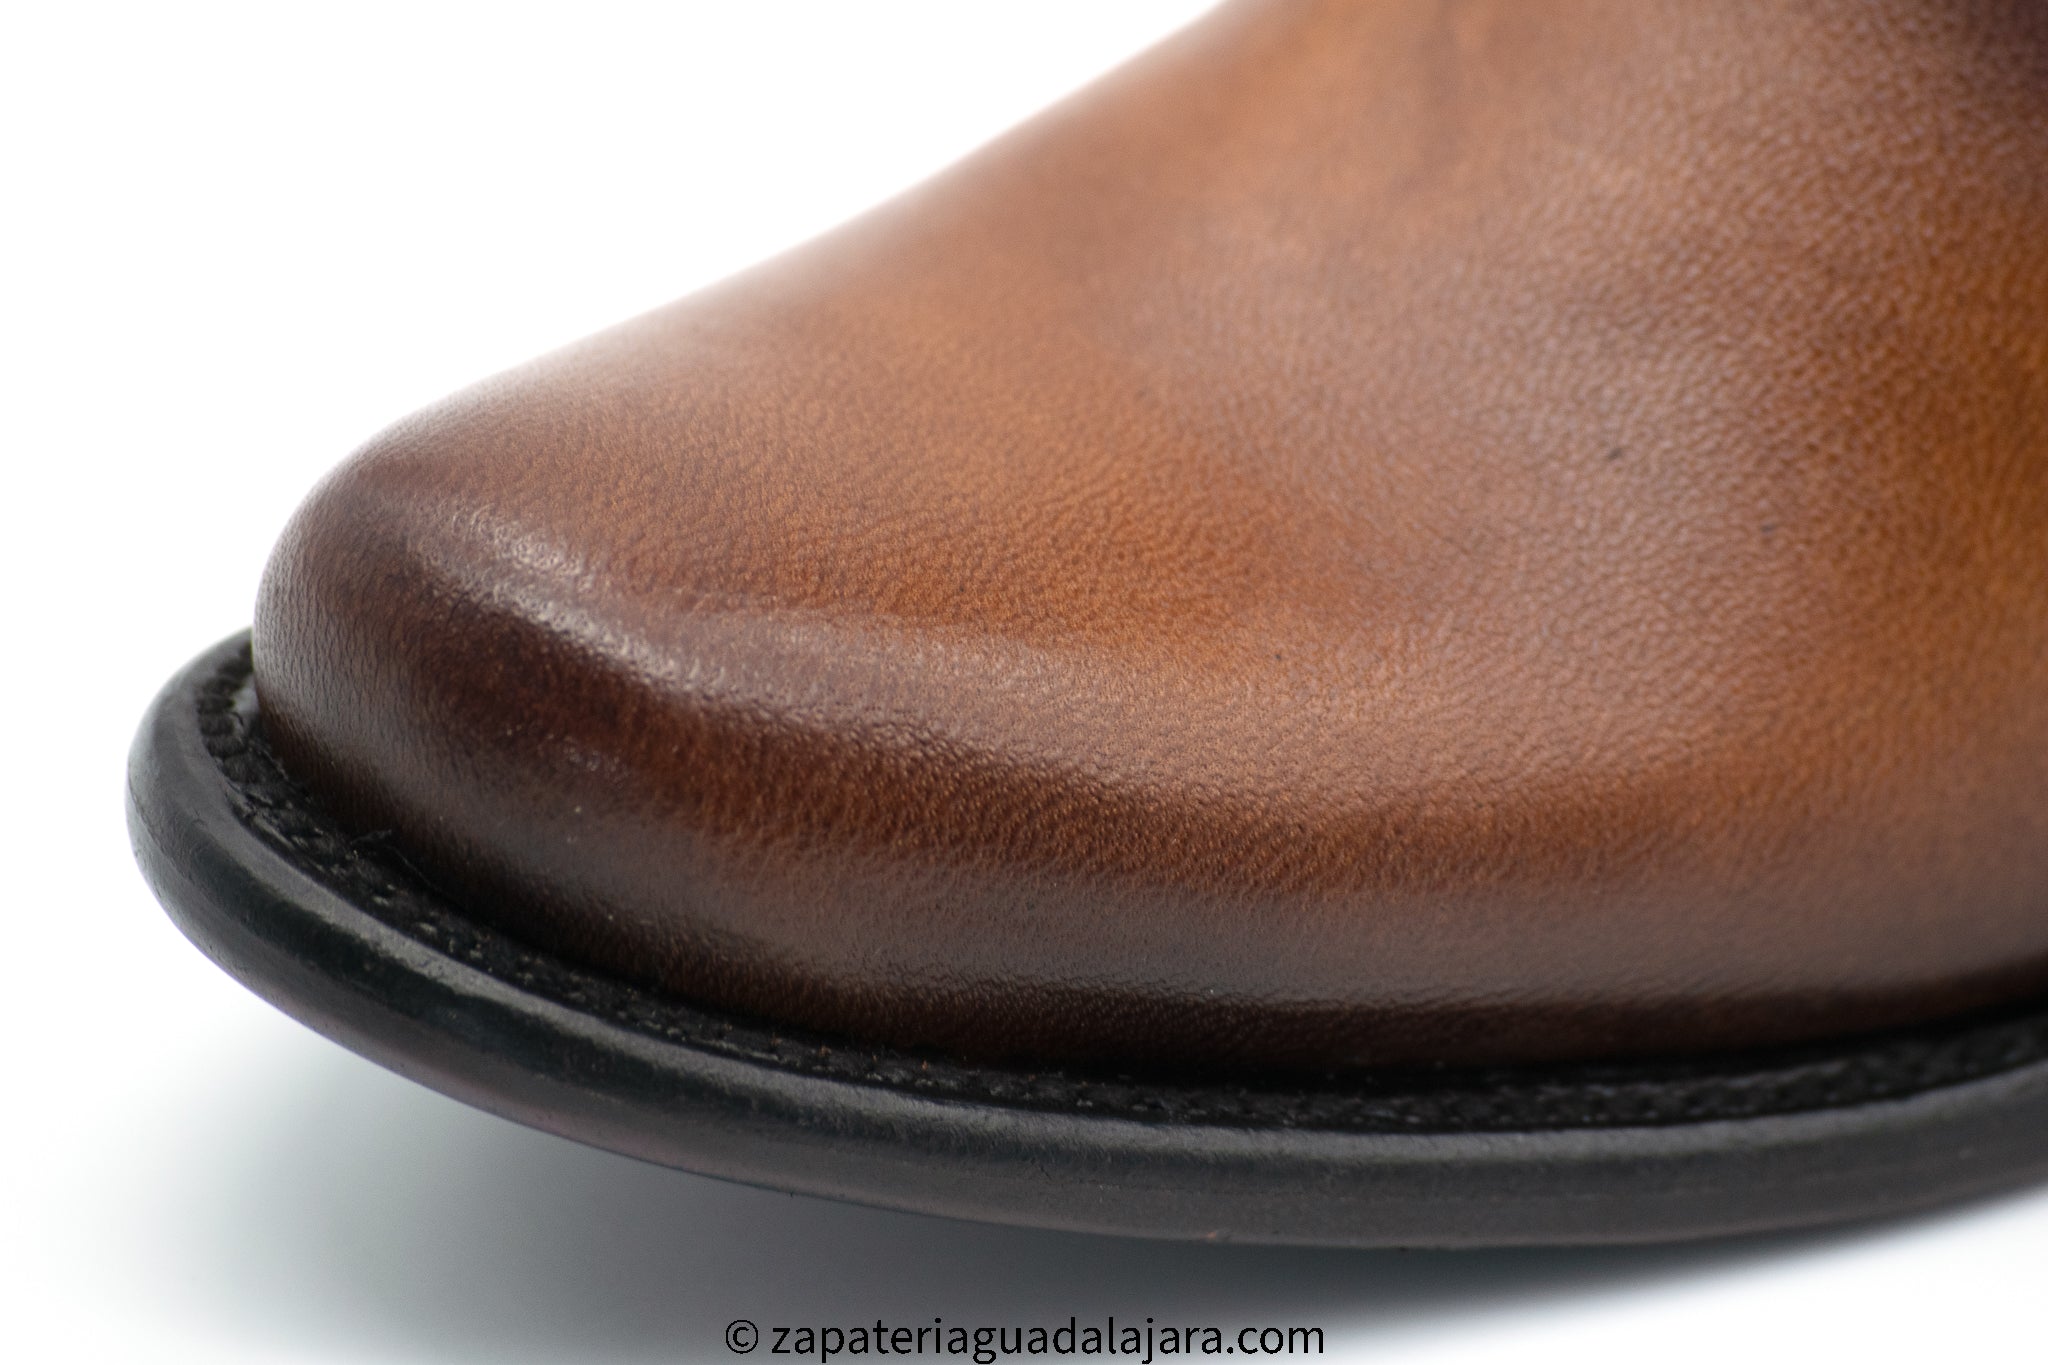 3688351 XIMENA BOVINE LEATHER HONEY  Genuine Leather Cowboy Boots and Hats  — Zapateria Guadalajara